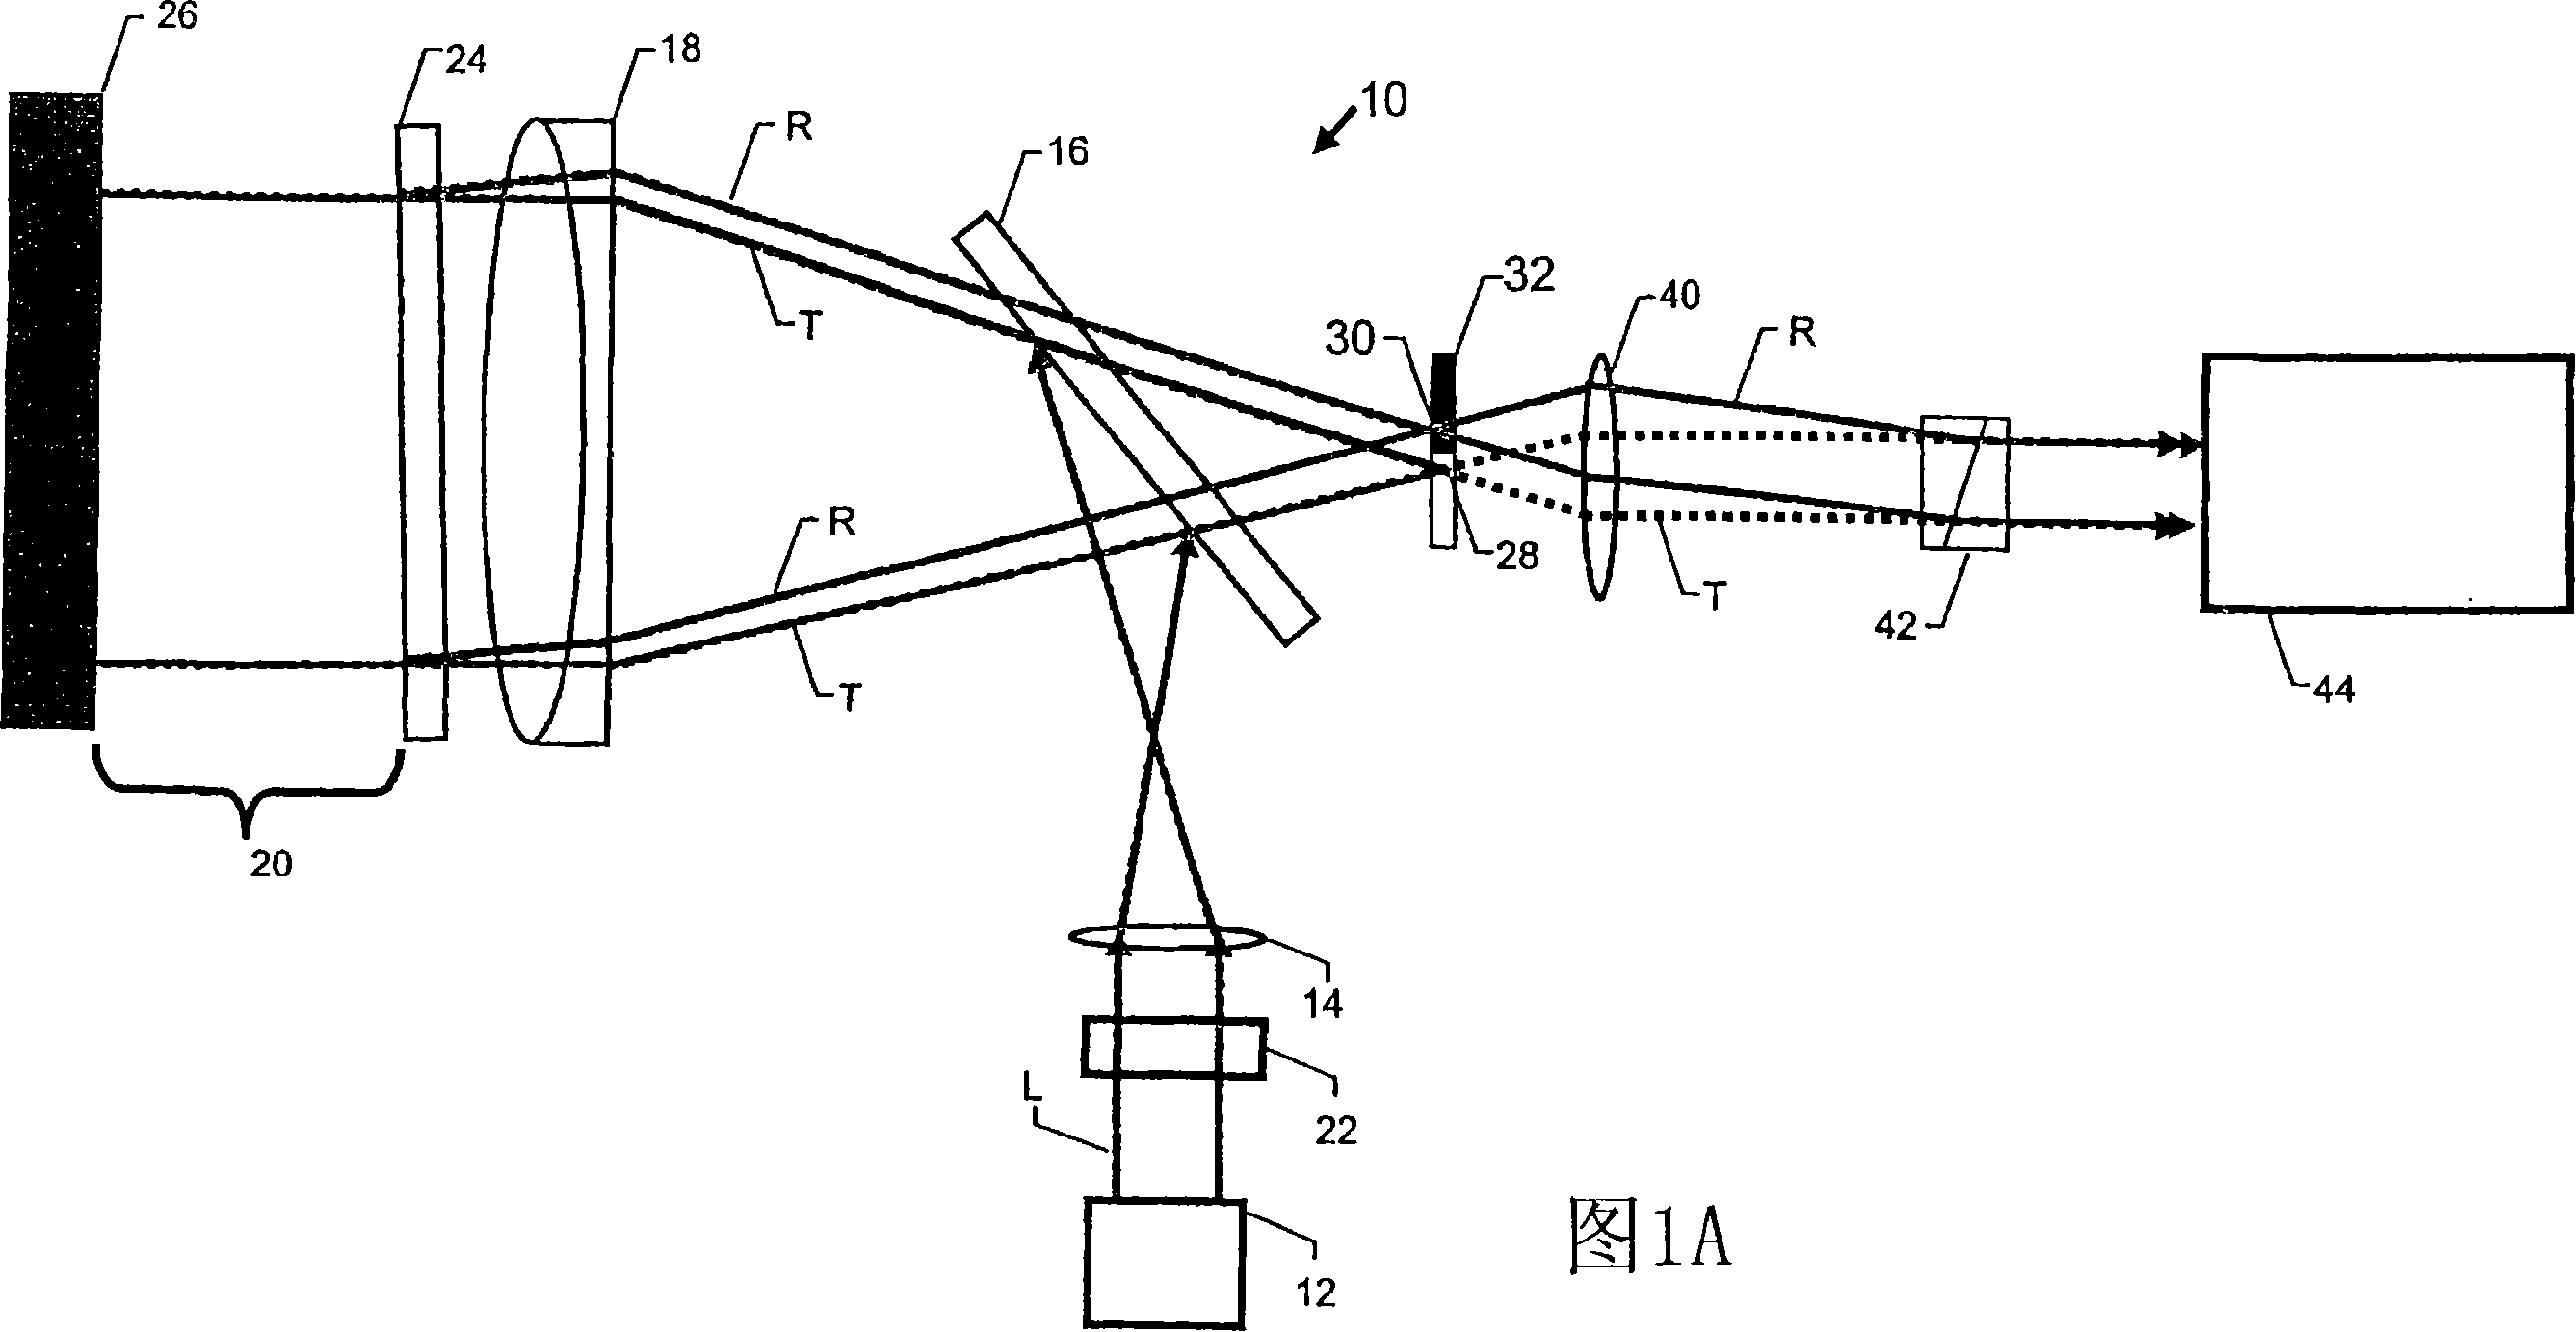 Fizeau interferomenter with simultaneous phase shift